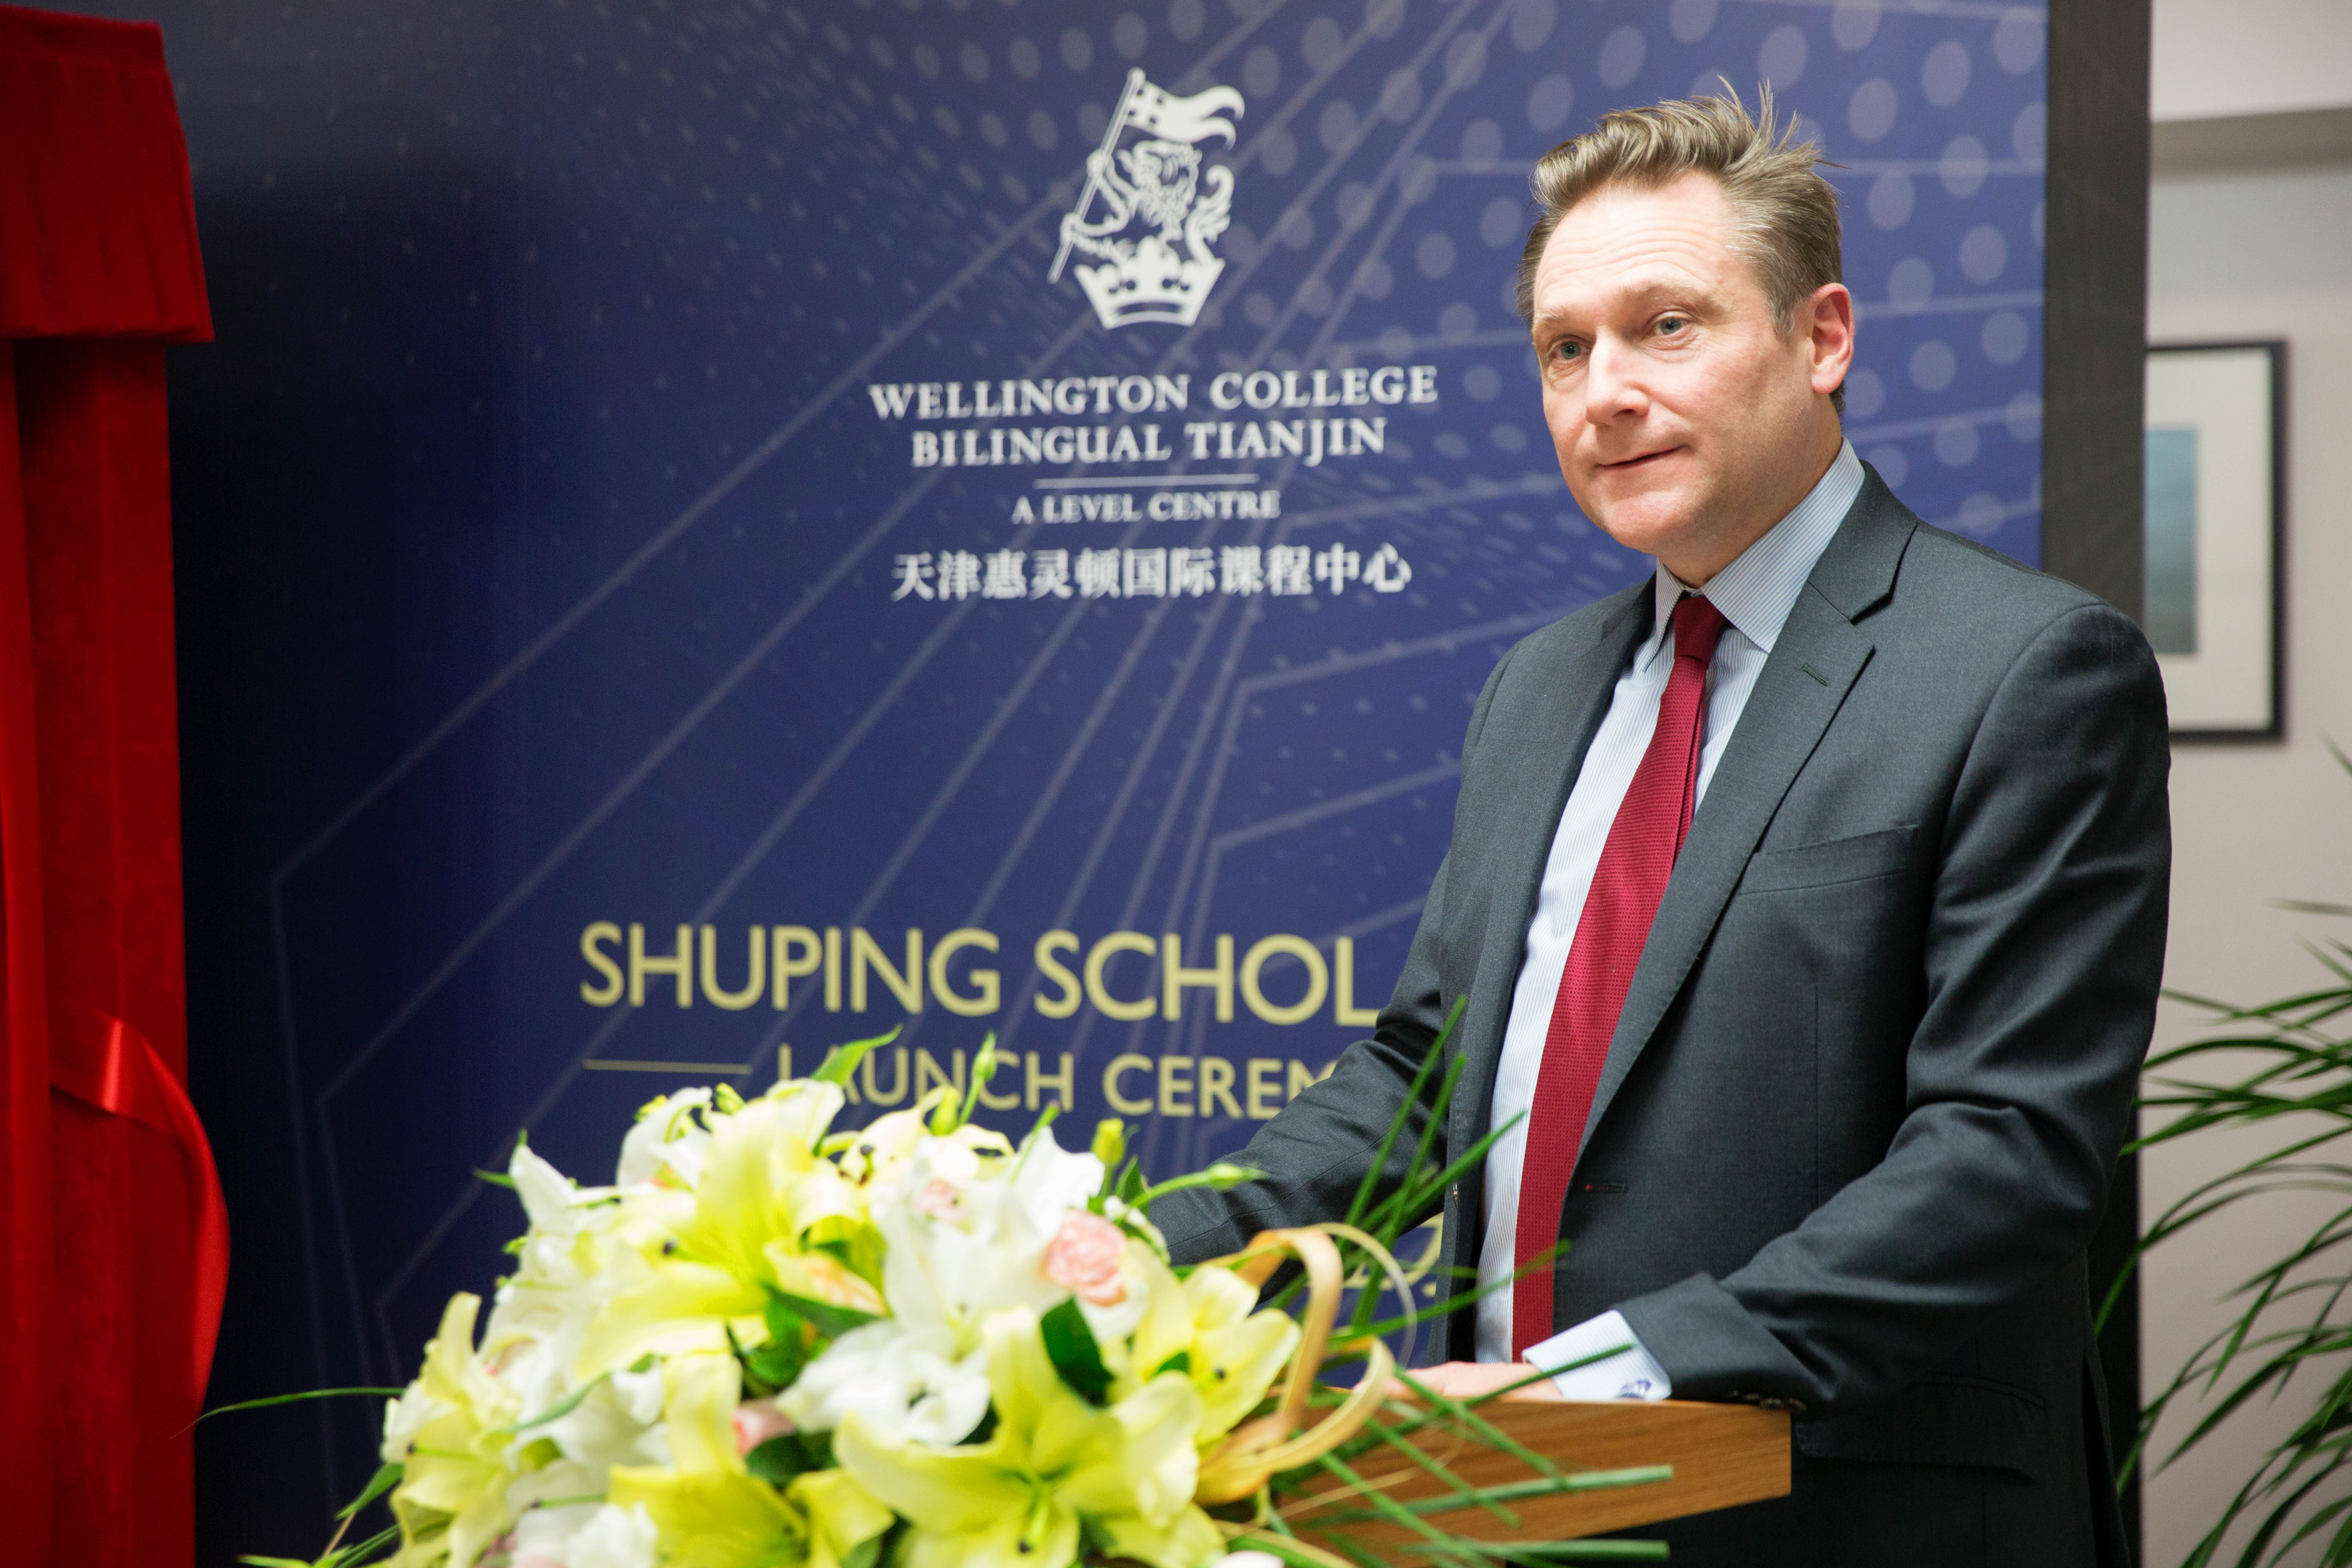 Wellington Shuping Scholarship Launch Ceremony